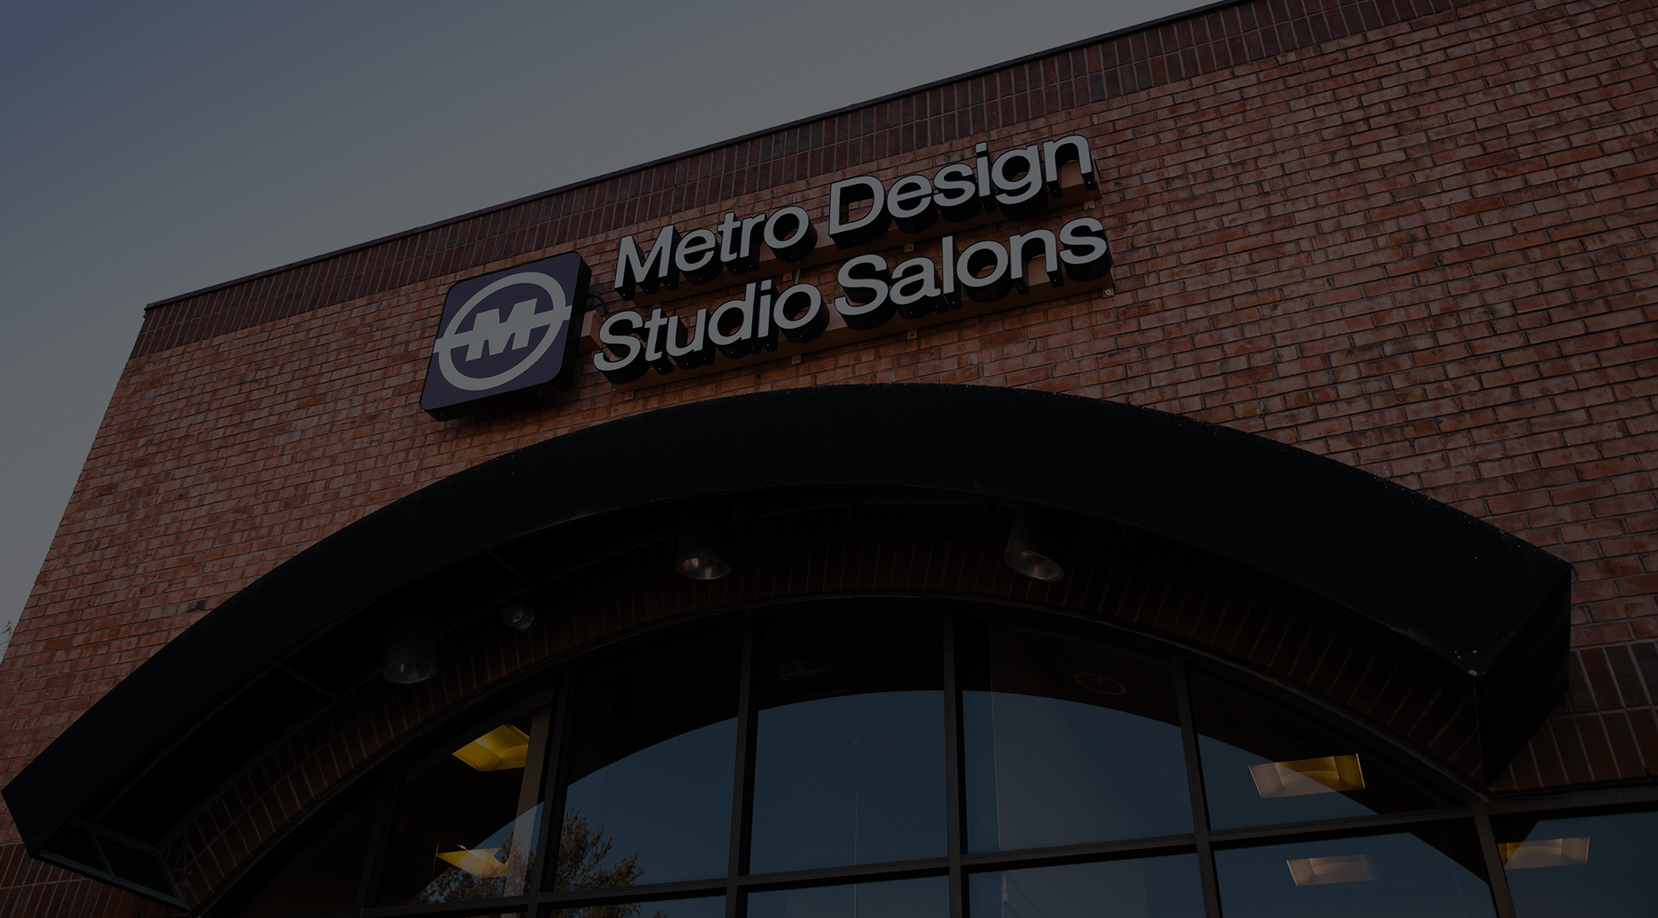 7. Nail Design Studio St. Louis - wide 7